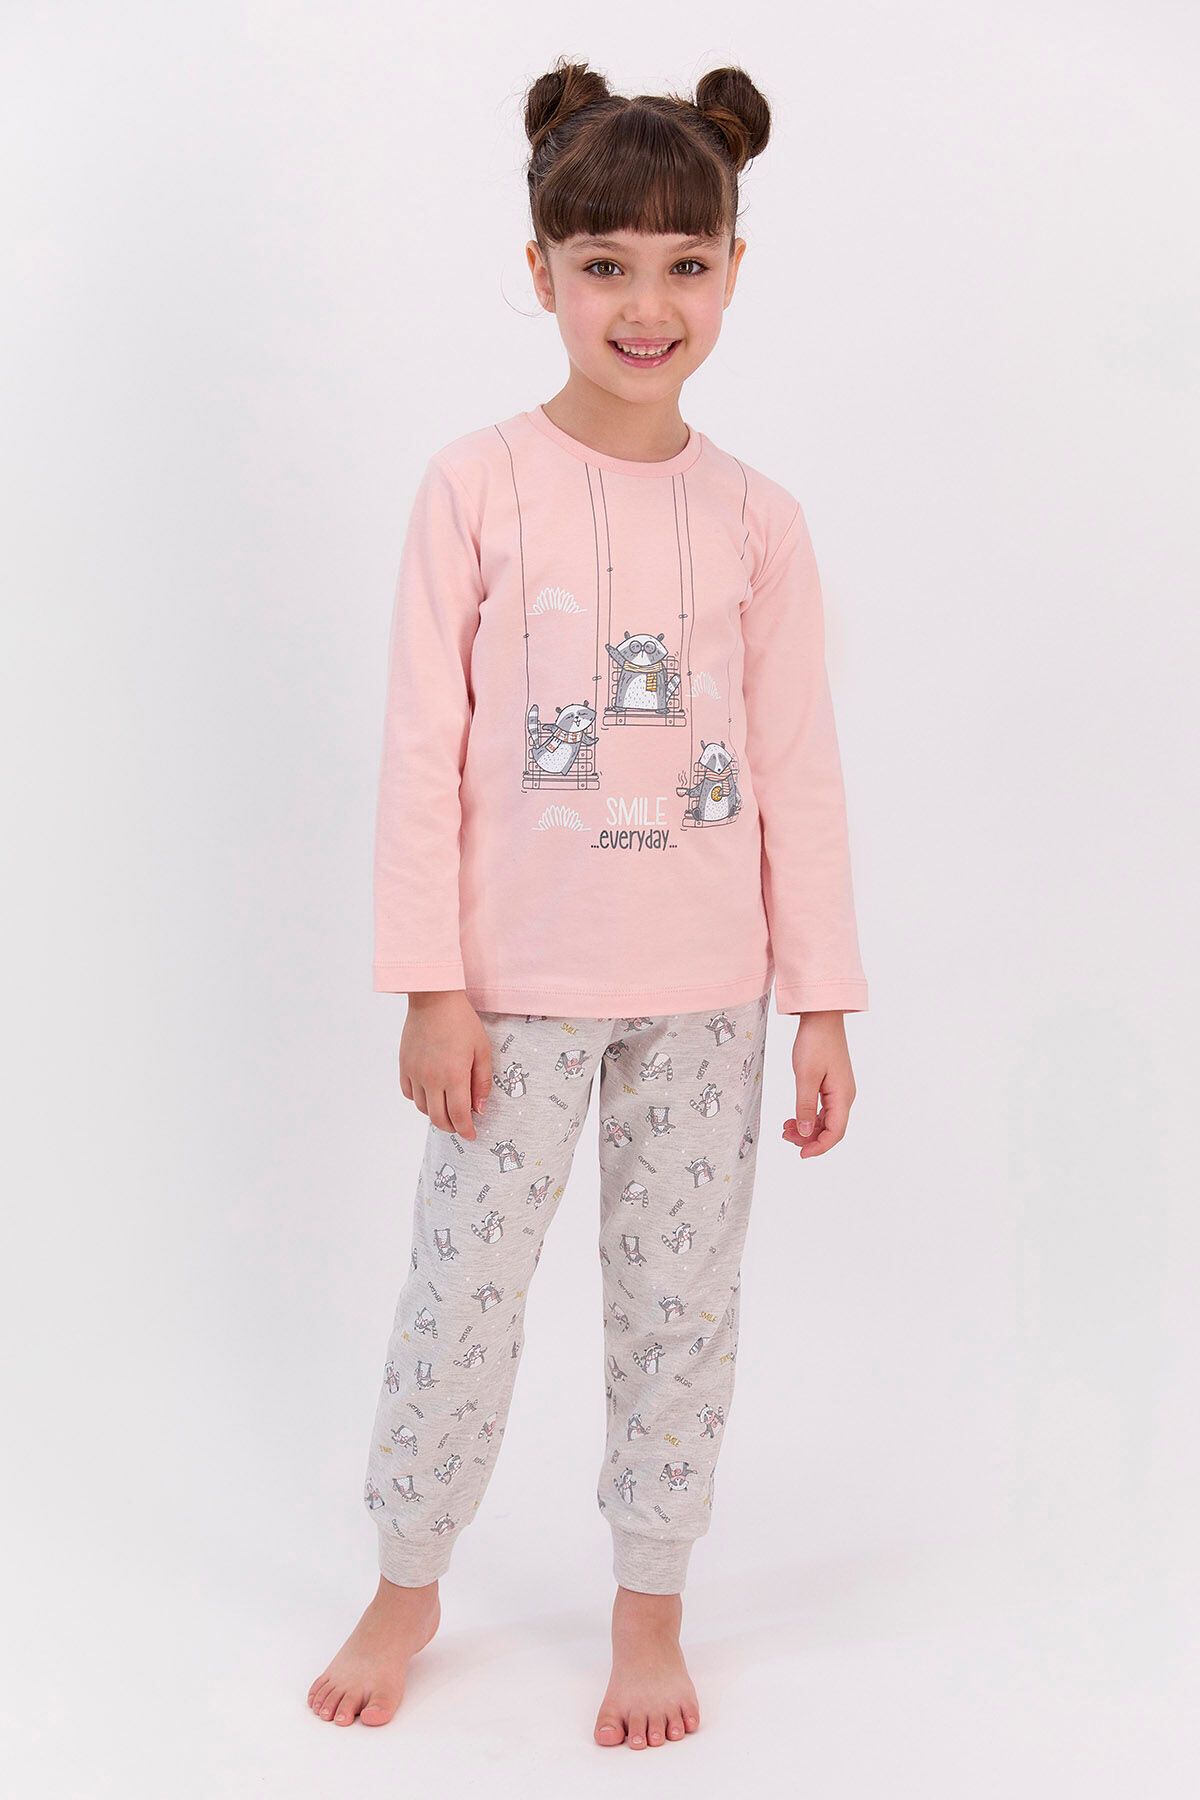 Rolypoly Smile Every Day Pudra Kız Çocuk Pijama Takımı